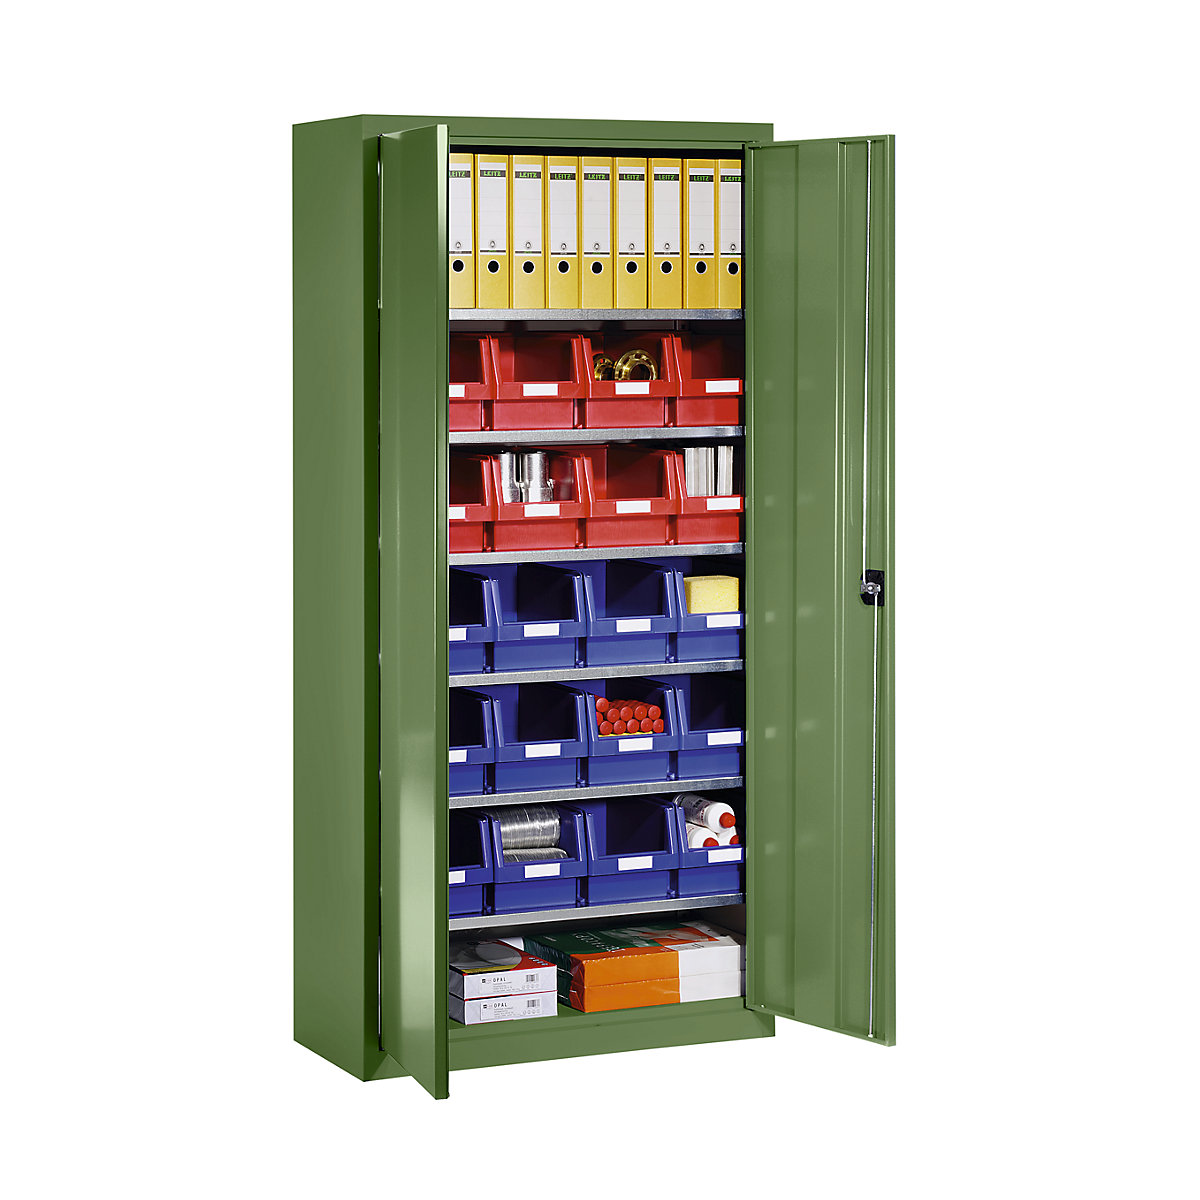 Storage cupboard made of sheet steel – eurokraft pro, with 20 open fronted storage bins, reseda green RAL 6011-3